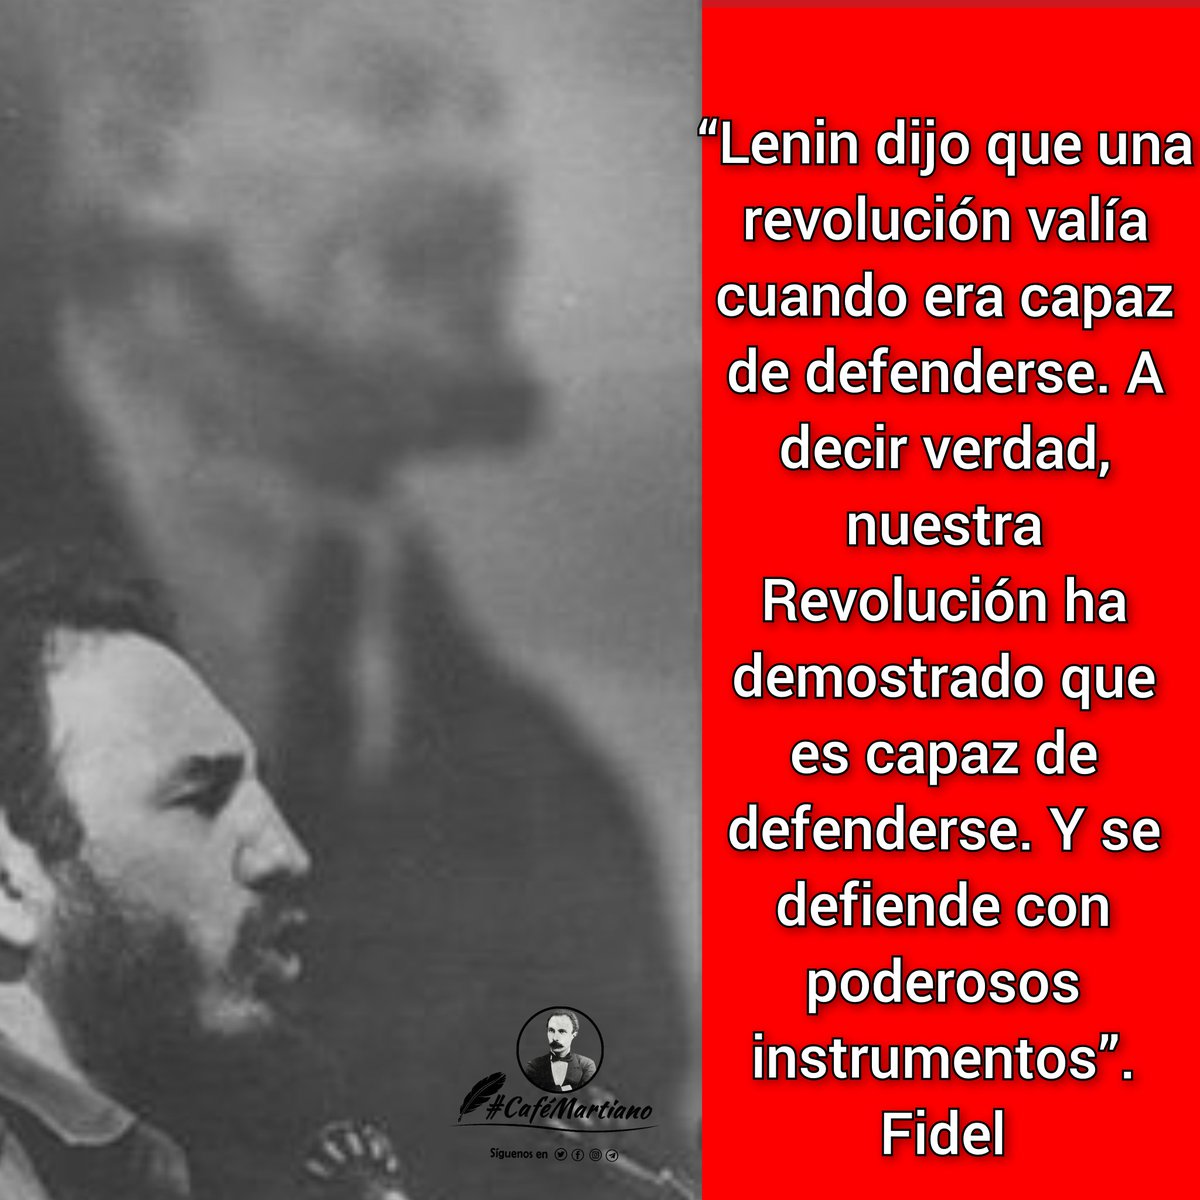 #LeninVive
#CubaHonra